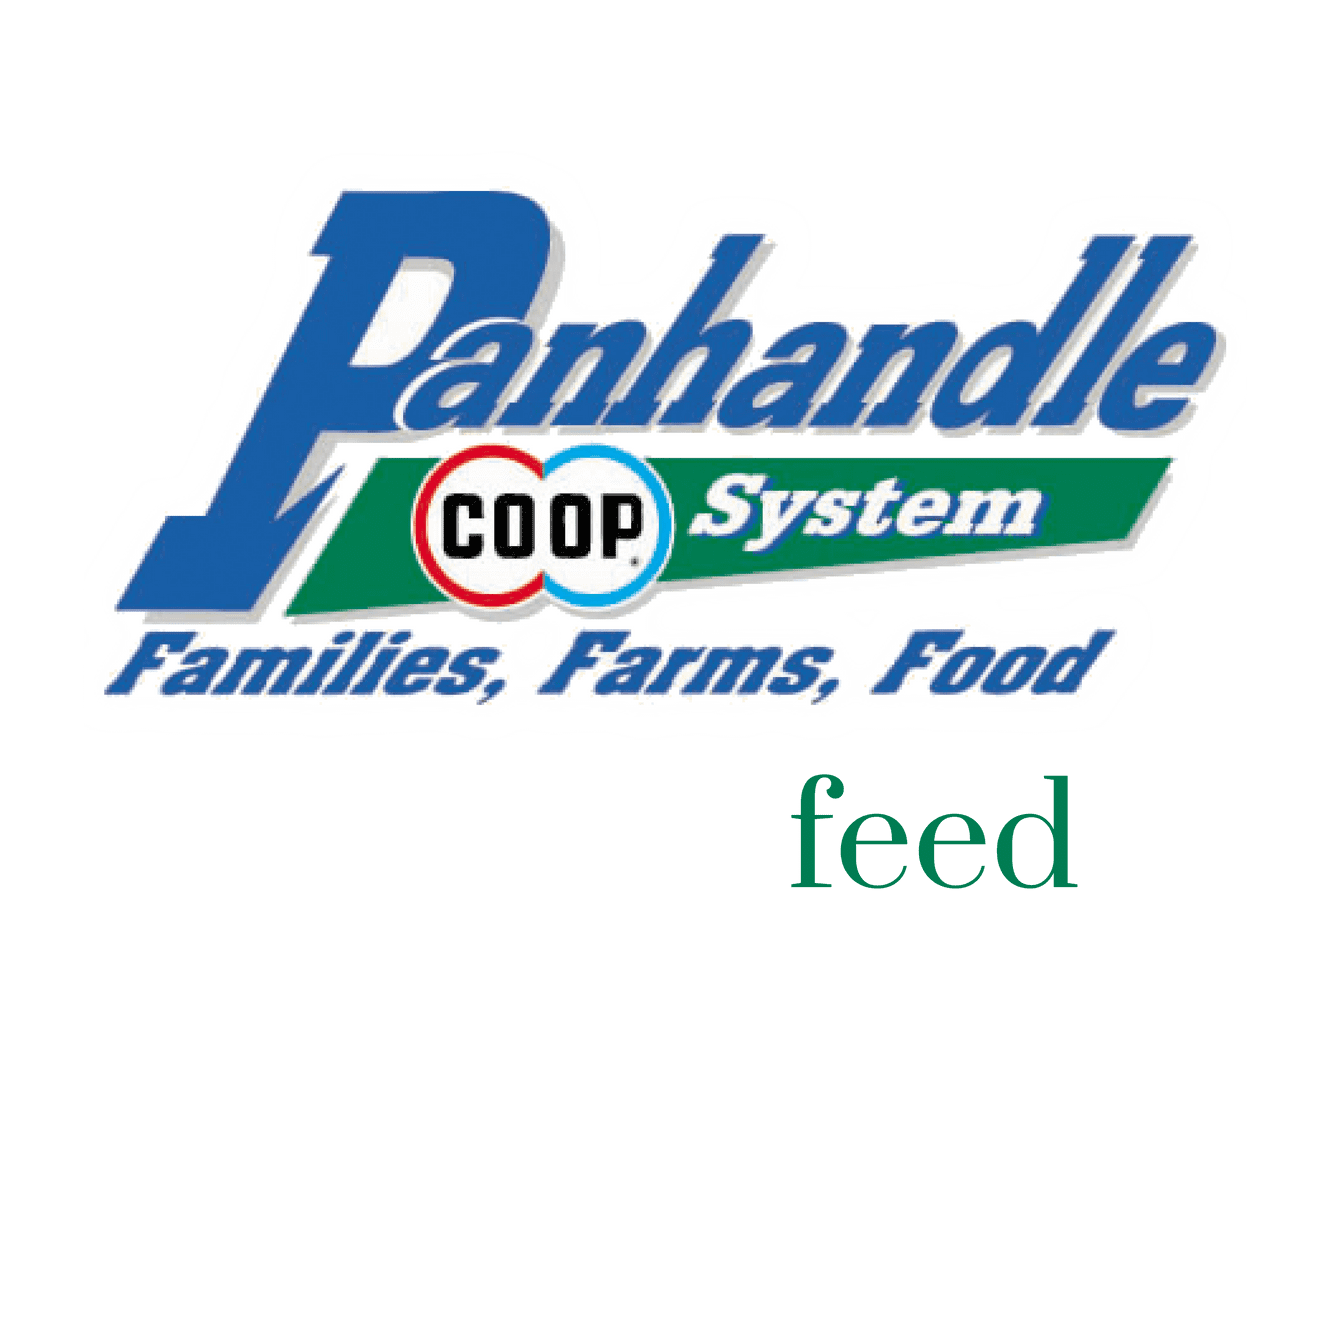 www.panhandlecoopfeed.com